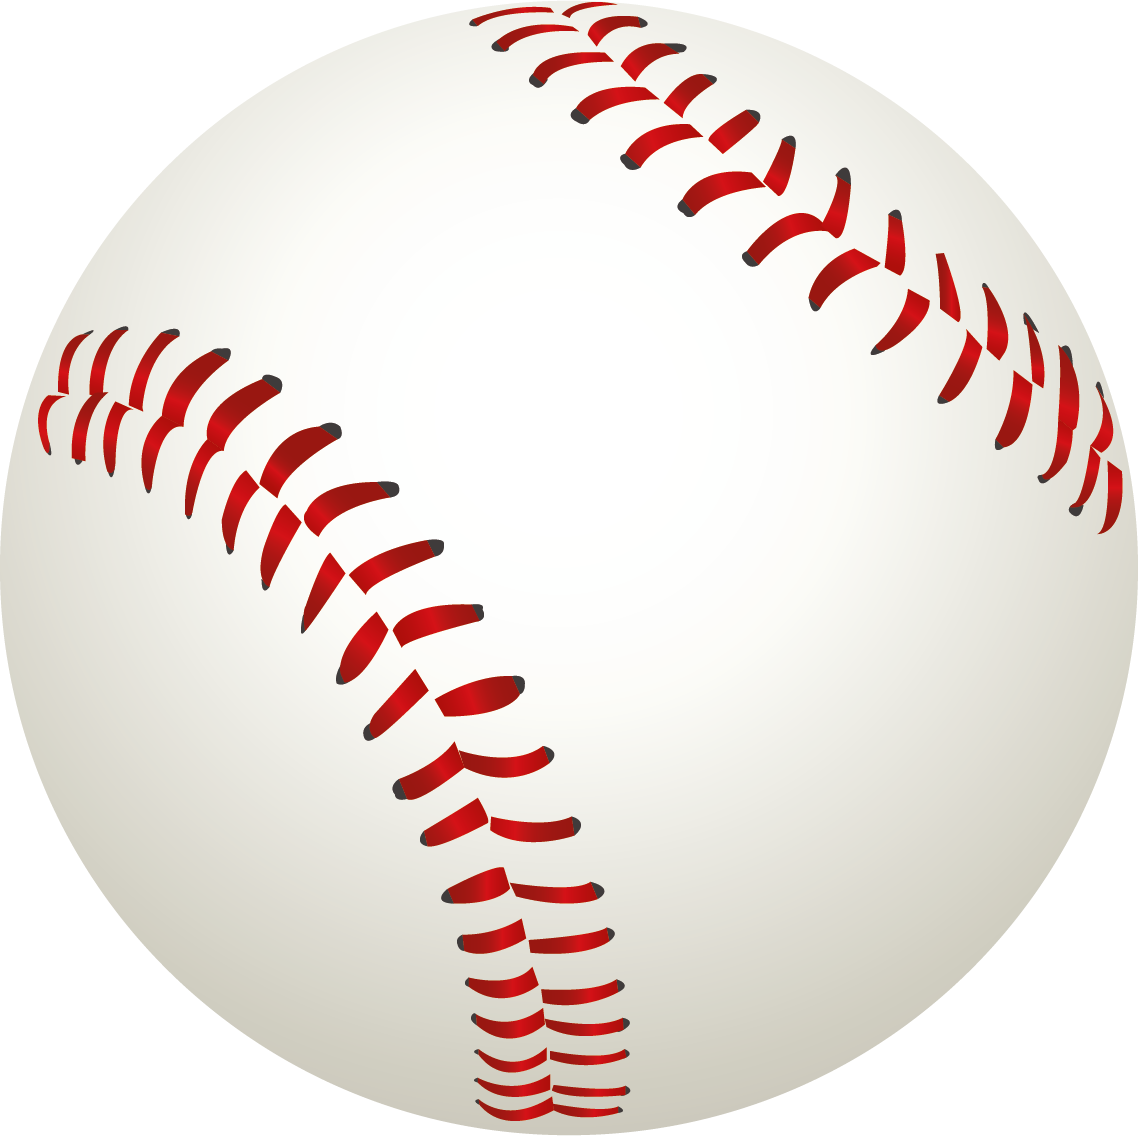 Free Baseball Clipart Free Clip Art Images Image 7 - Culver City Little League (1138x1136)